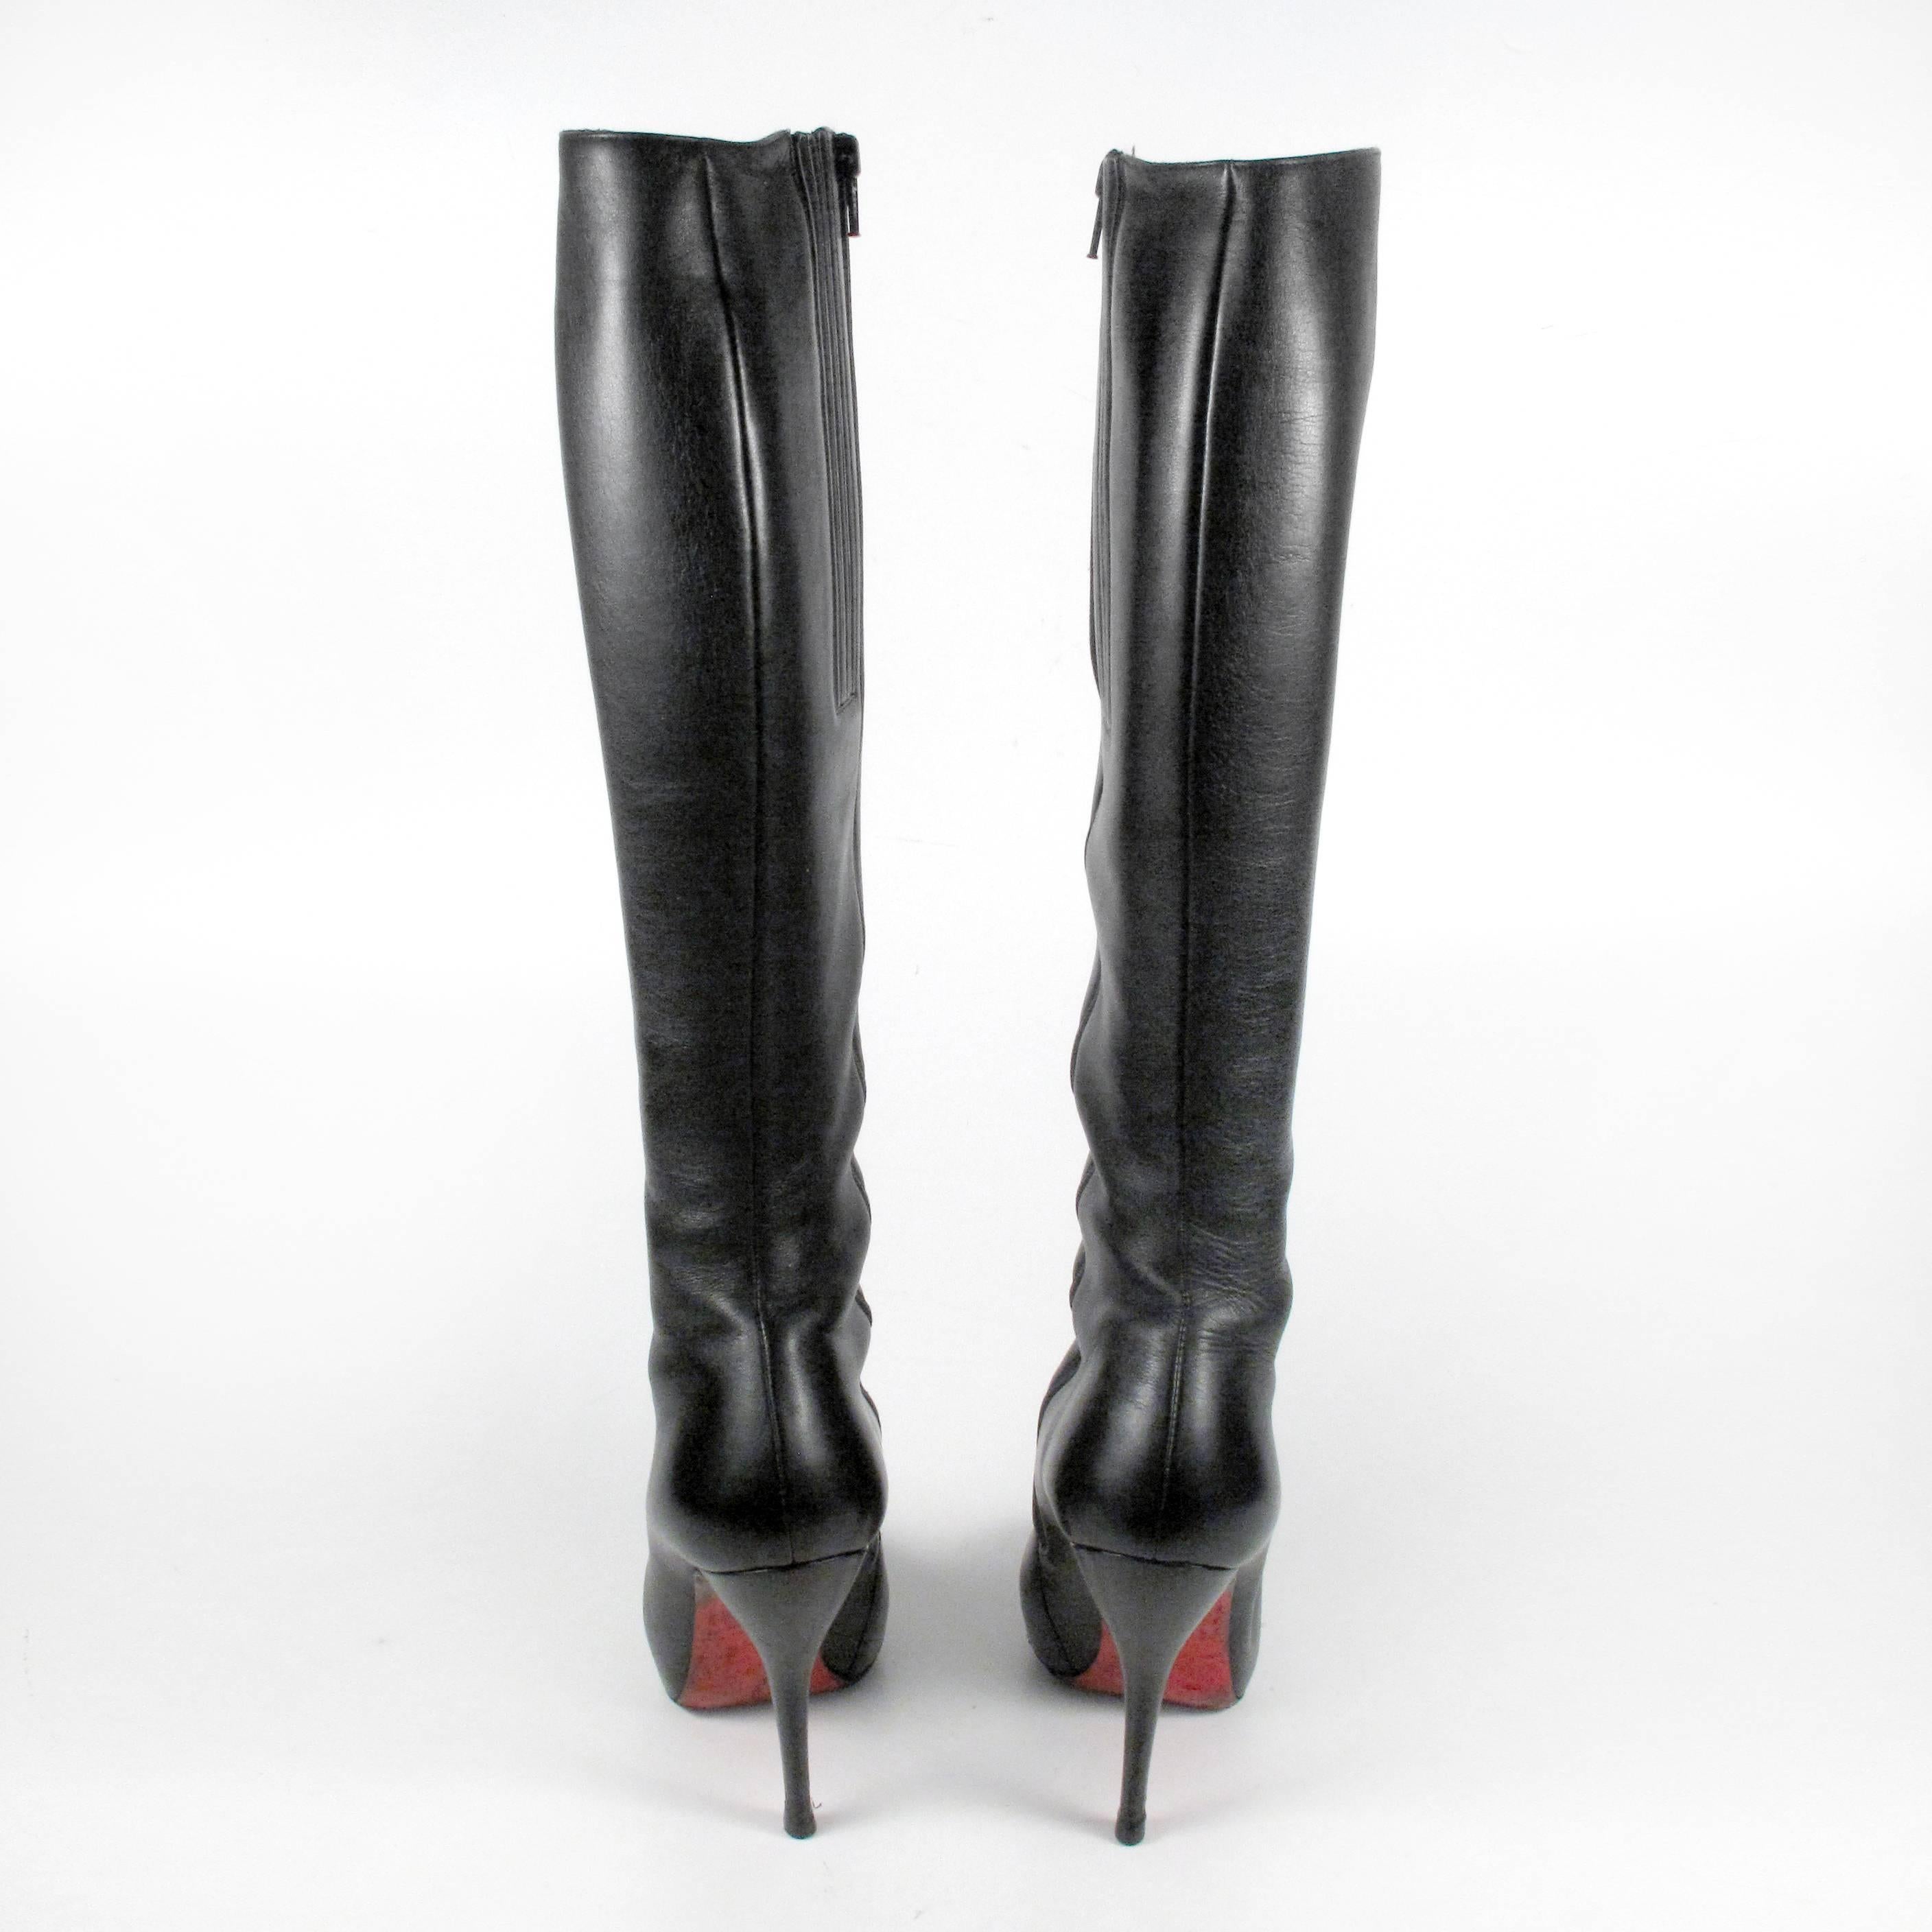 Women's Christian Louboutin Knee High Boots 39 Black Leather120 Heels Shoes Feticha